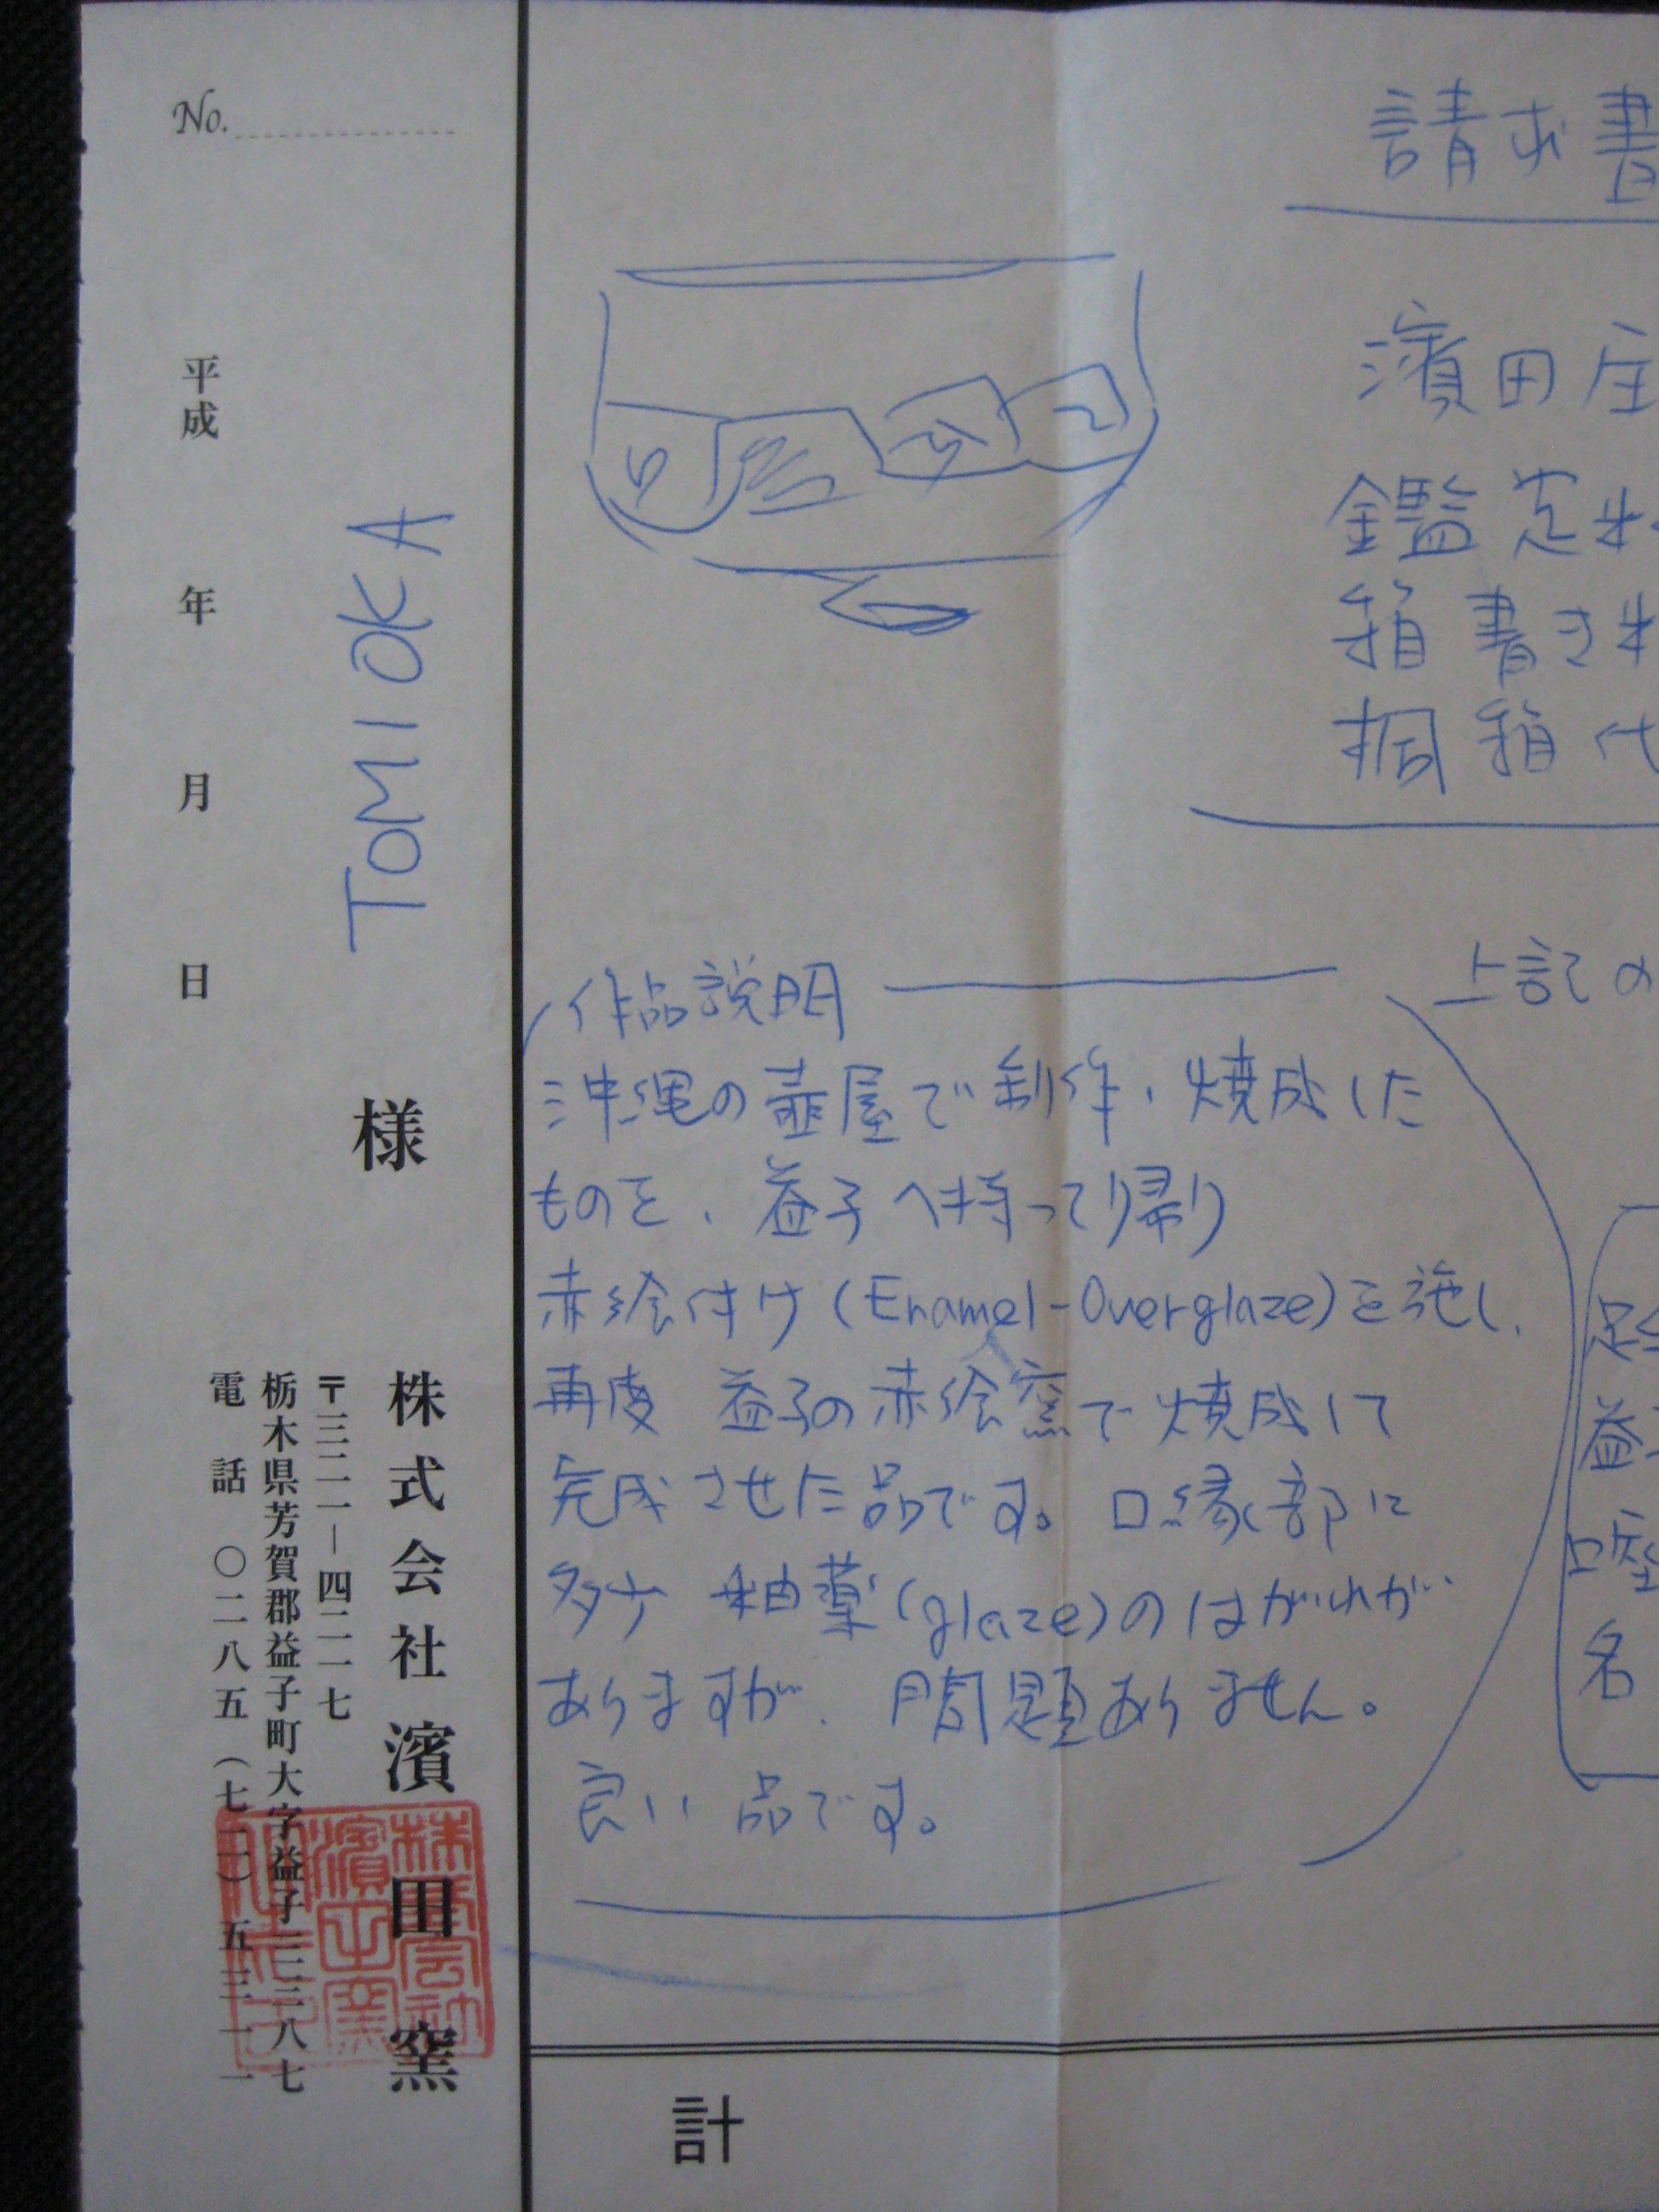 Hamada Shoji Matcha Chawan (Tea Bowl), Okinawa and Mashiko, 1972